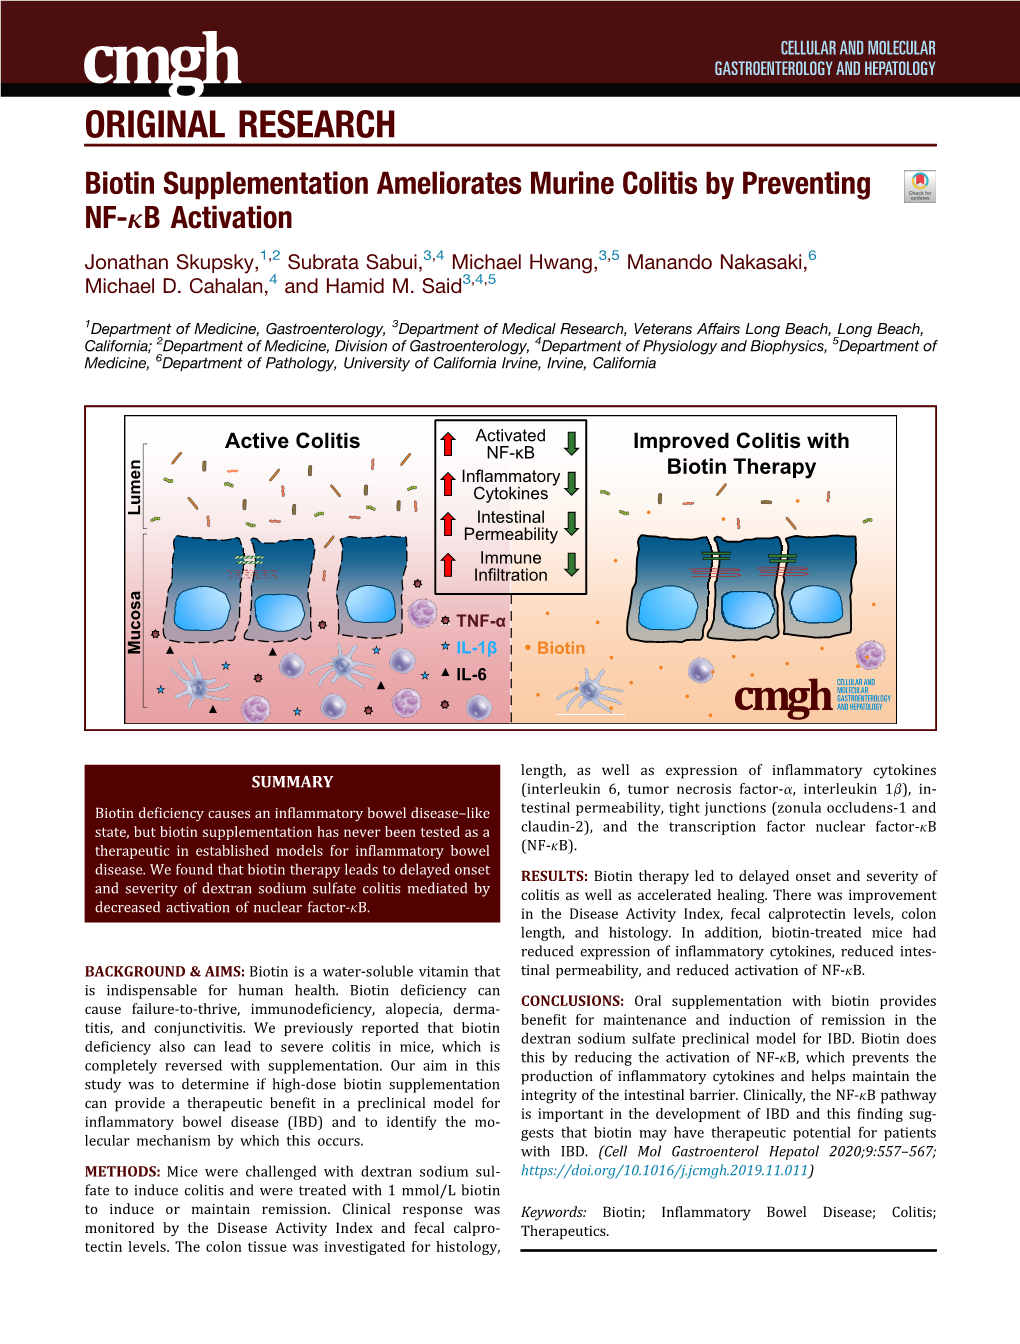 Biotin Supplementation Ameliorates Murine Colitis by Preventing NF-Kb Activation Jonathan Skupsky,1,2 Subrata Sabui,3,4 Michael Hwang,3,5 Manando Nakasaki,6 Michael D